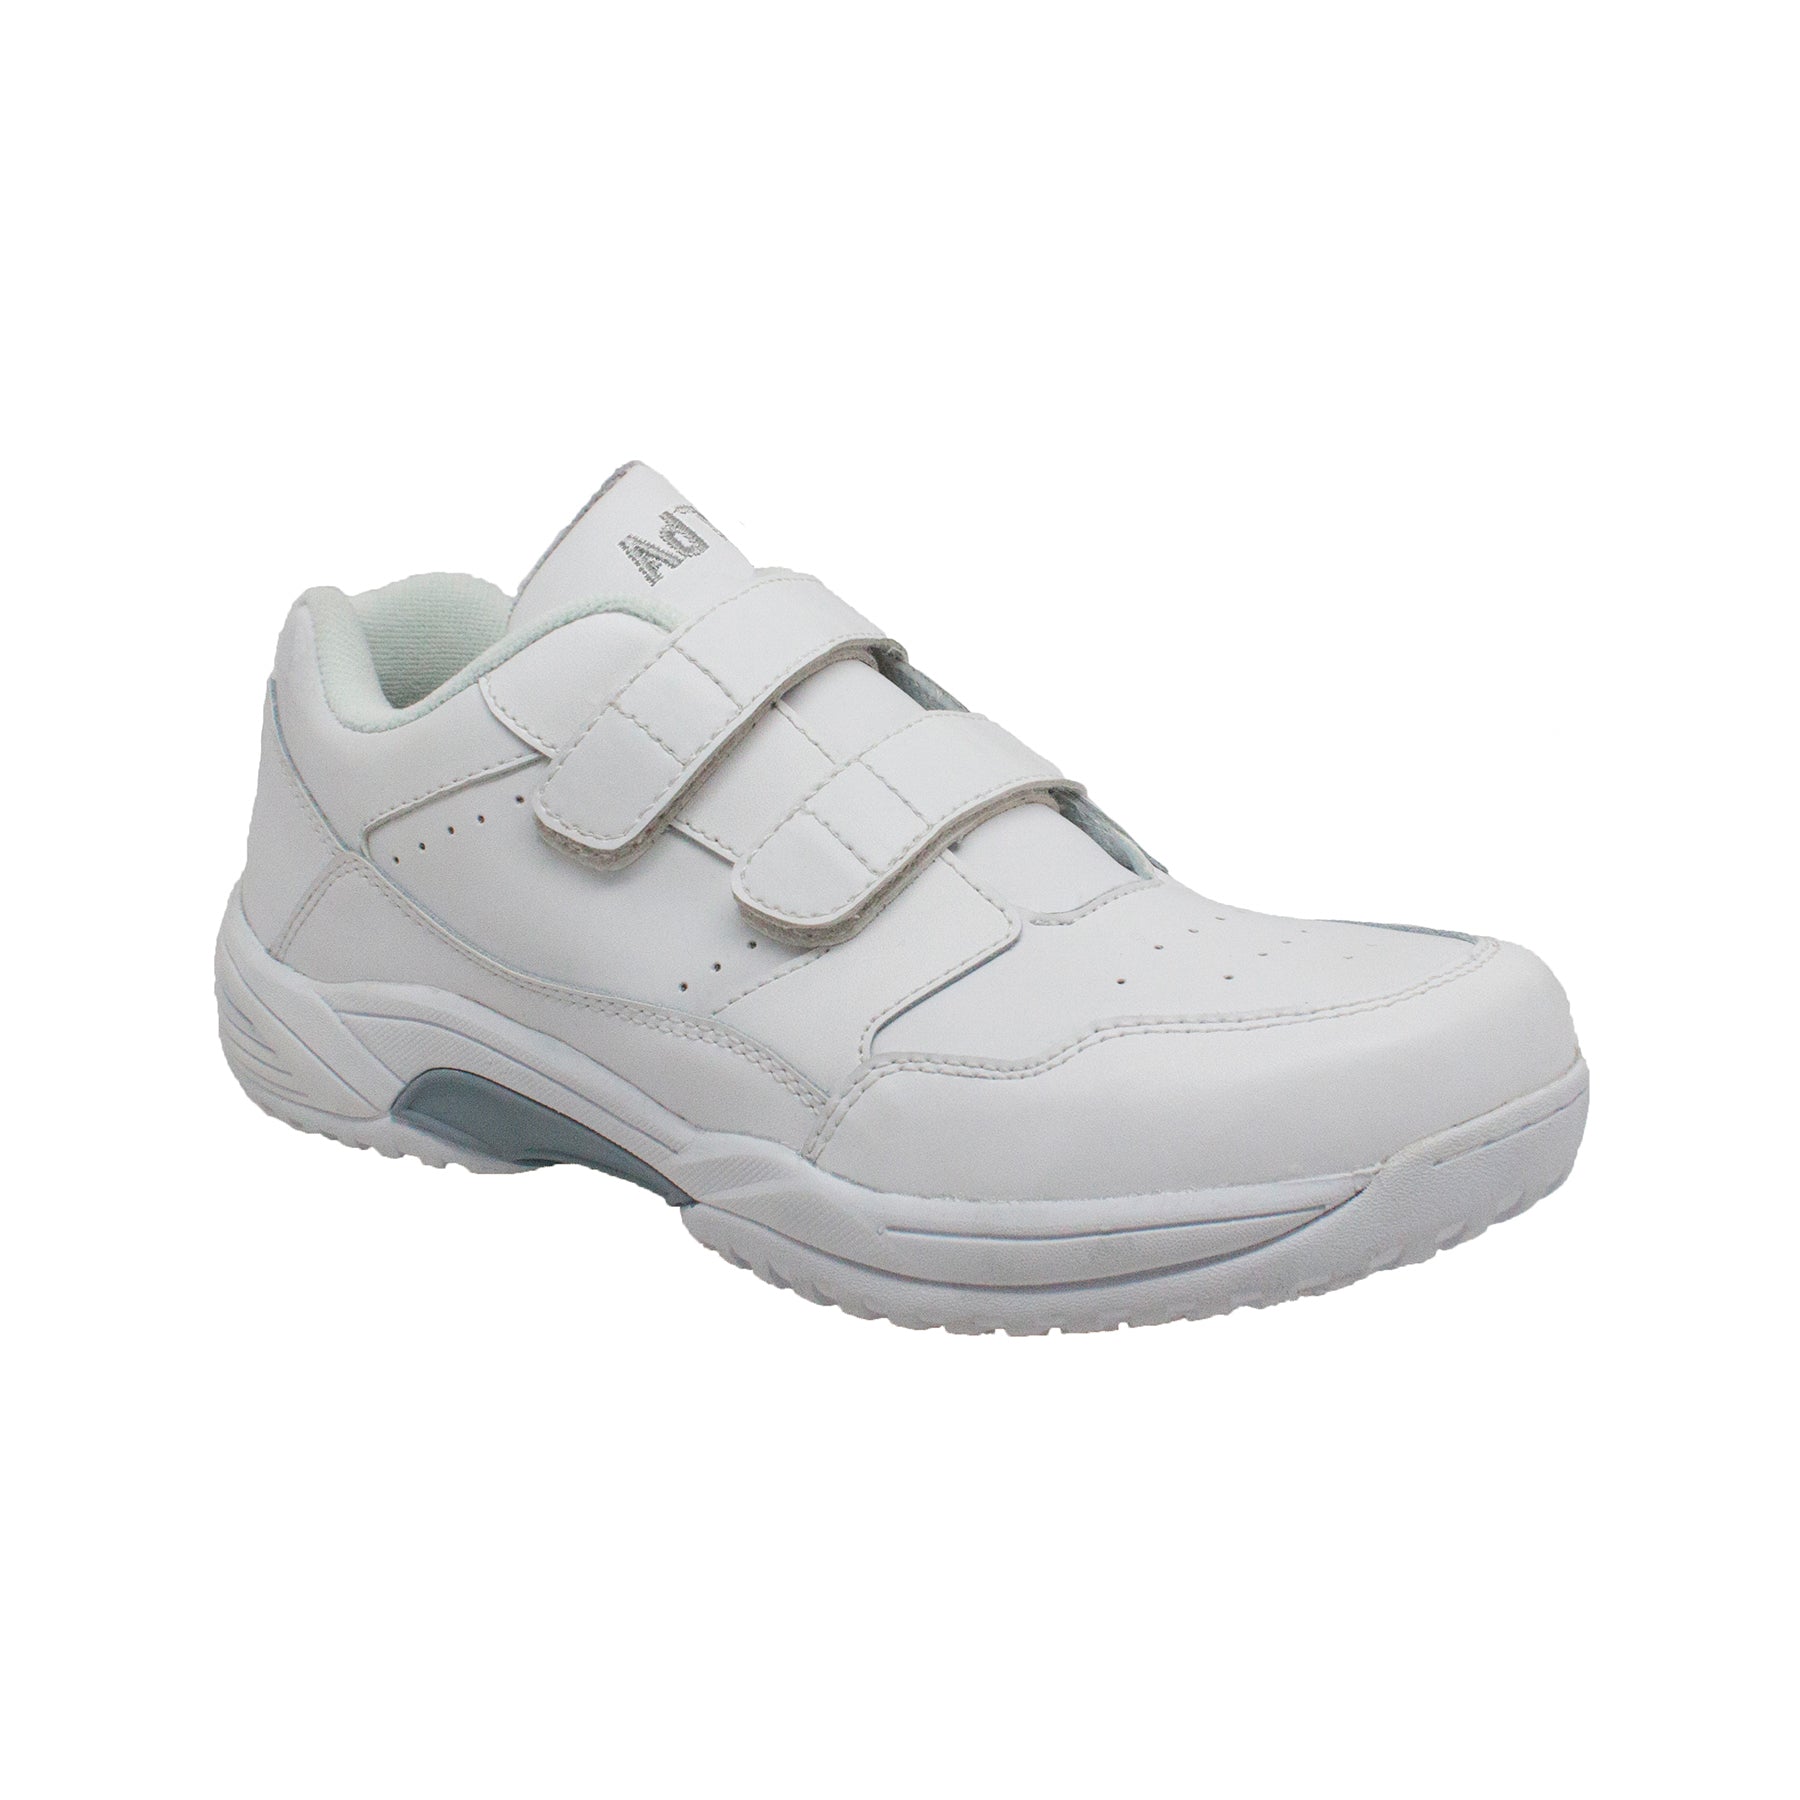 white leather uniform shoes